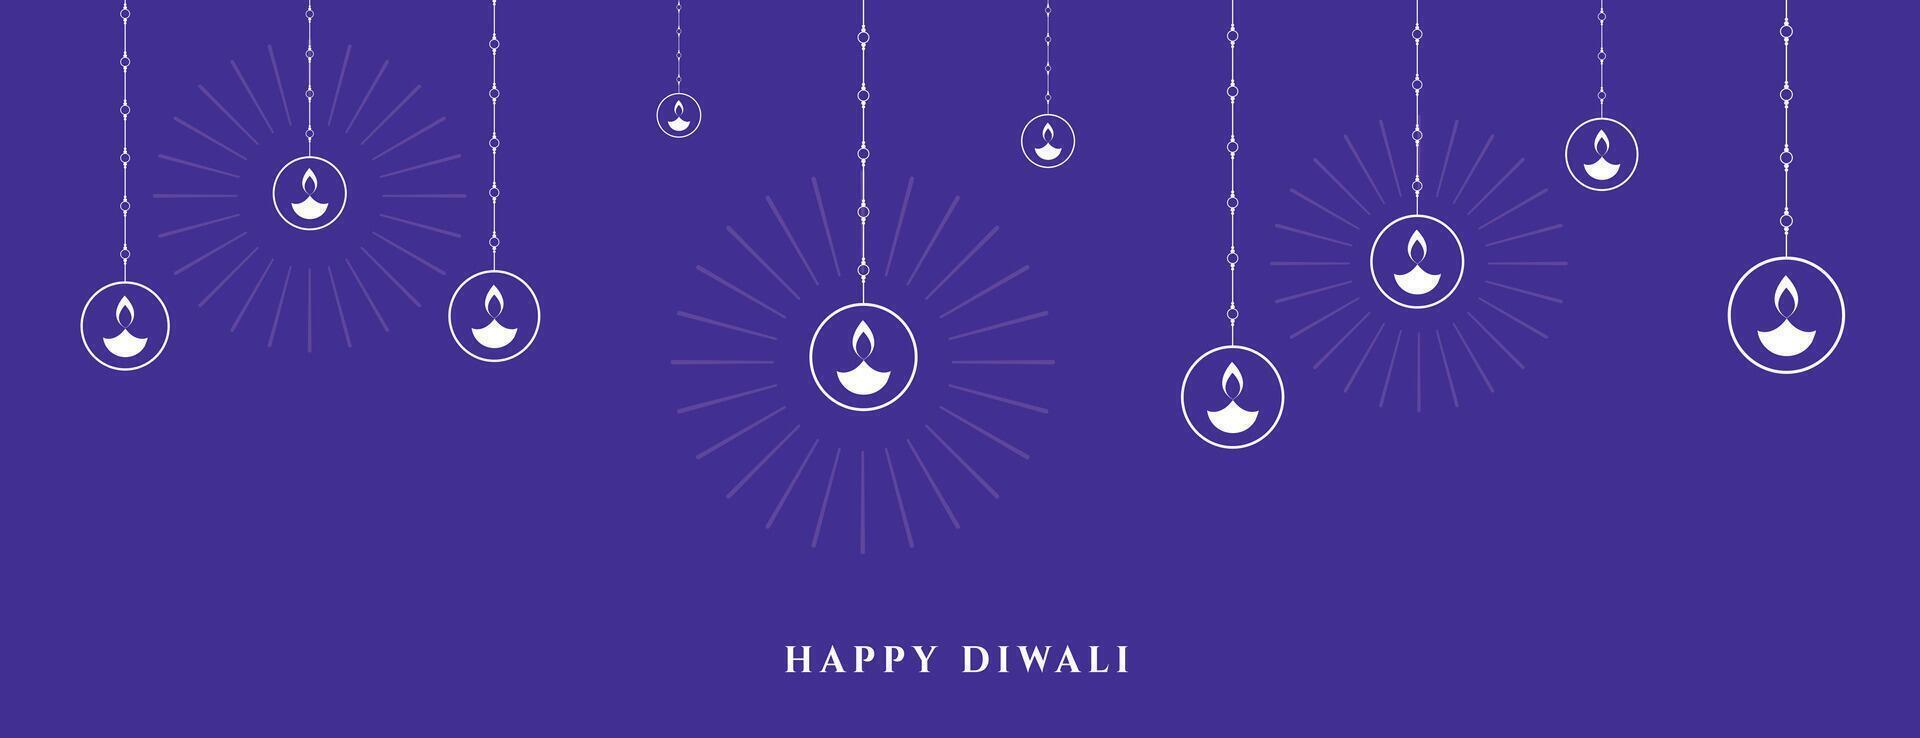 happy diwali banner in purple background with lantern design vector